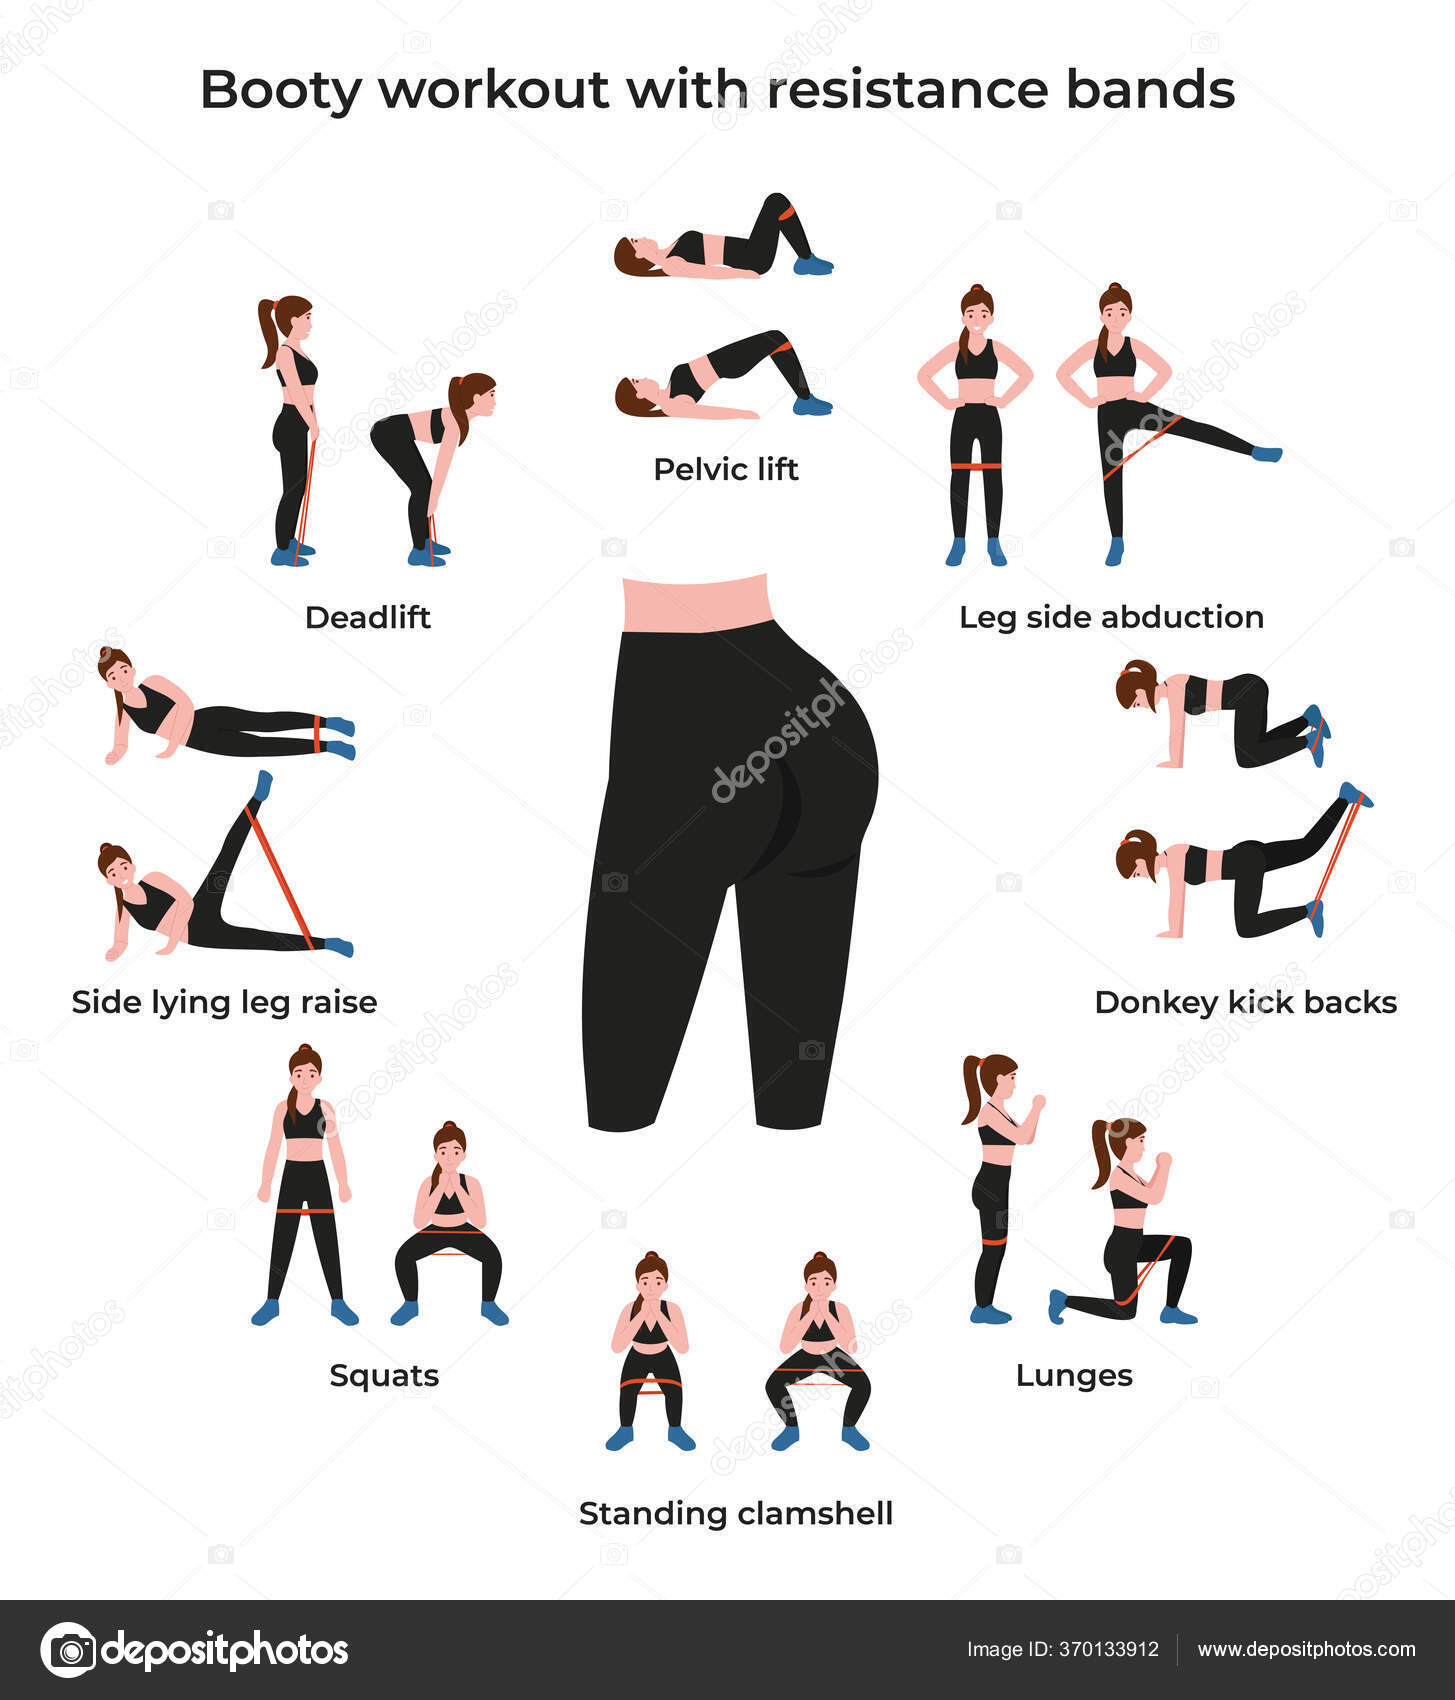 https://st3.depositphotos.com/23023960/37013/v/1600/depositphotos_370133912-stock-illustration-set-booty-glutes-workout-resistance.jpg